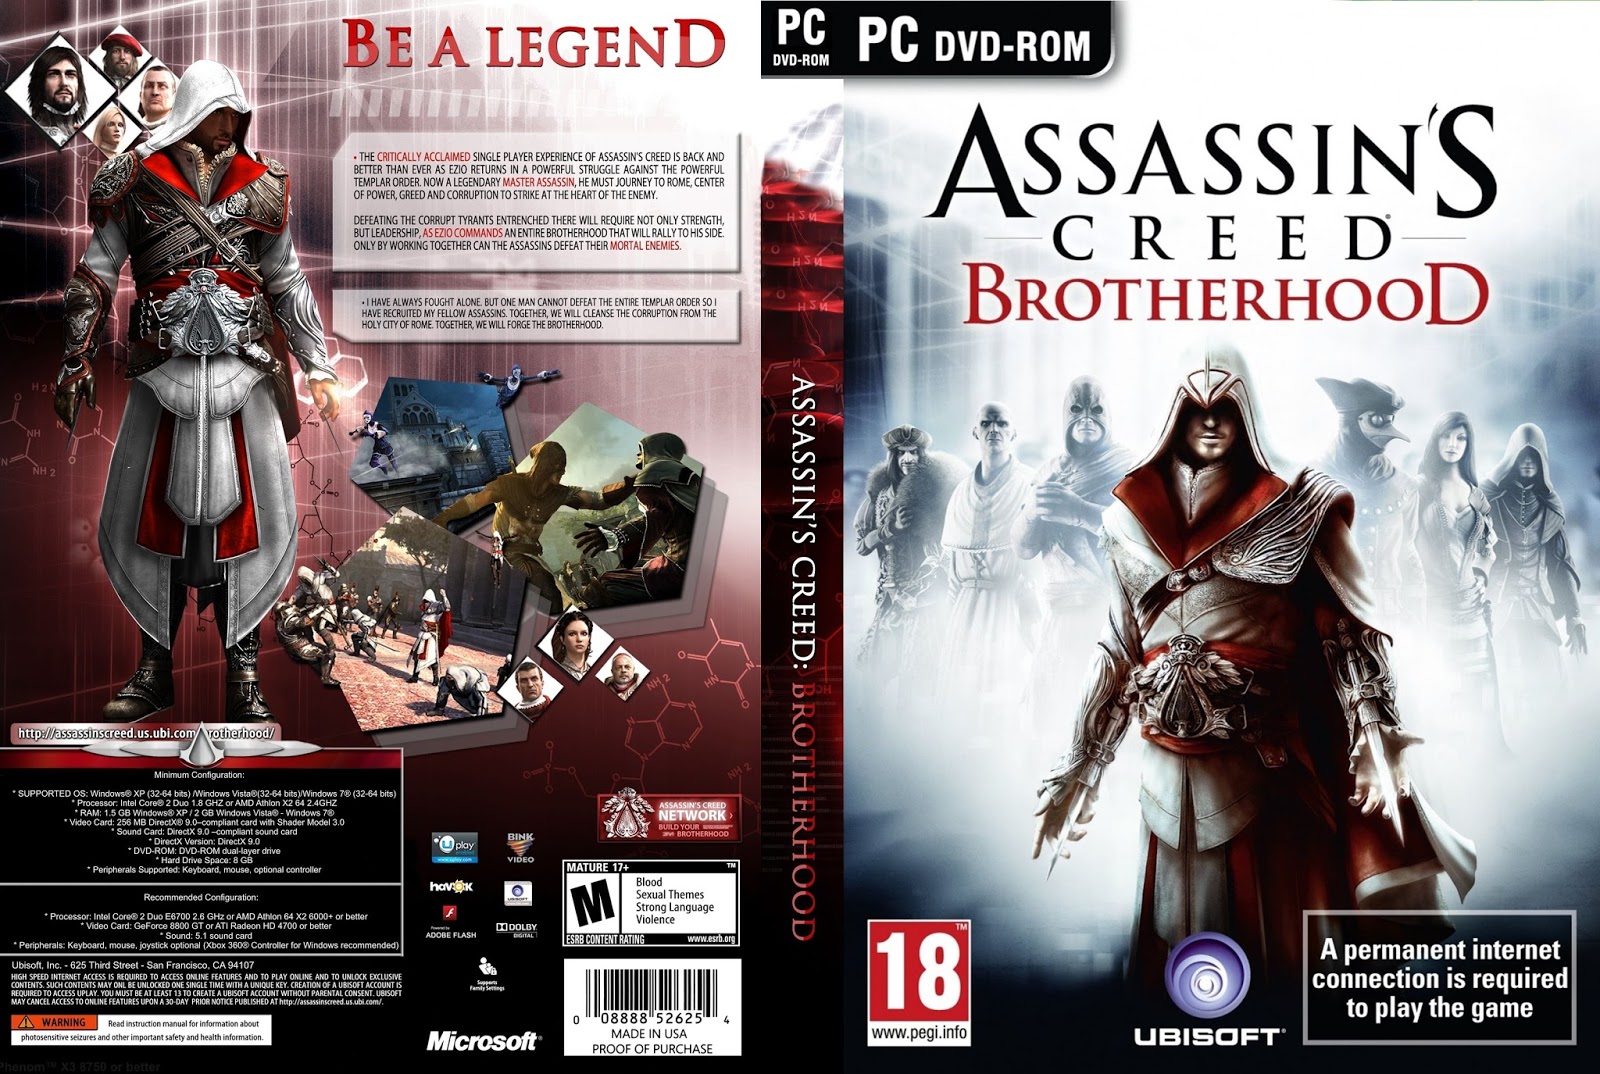 Assassin s коды. Ассасин Крид братство крови обложка. Обложка ассасин бразерхуд. Диск с игрой ассасин Крид для ПК. Assassins Creed Brotherhood Xbox 360 обложка.